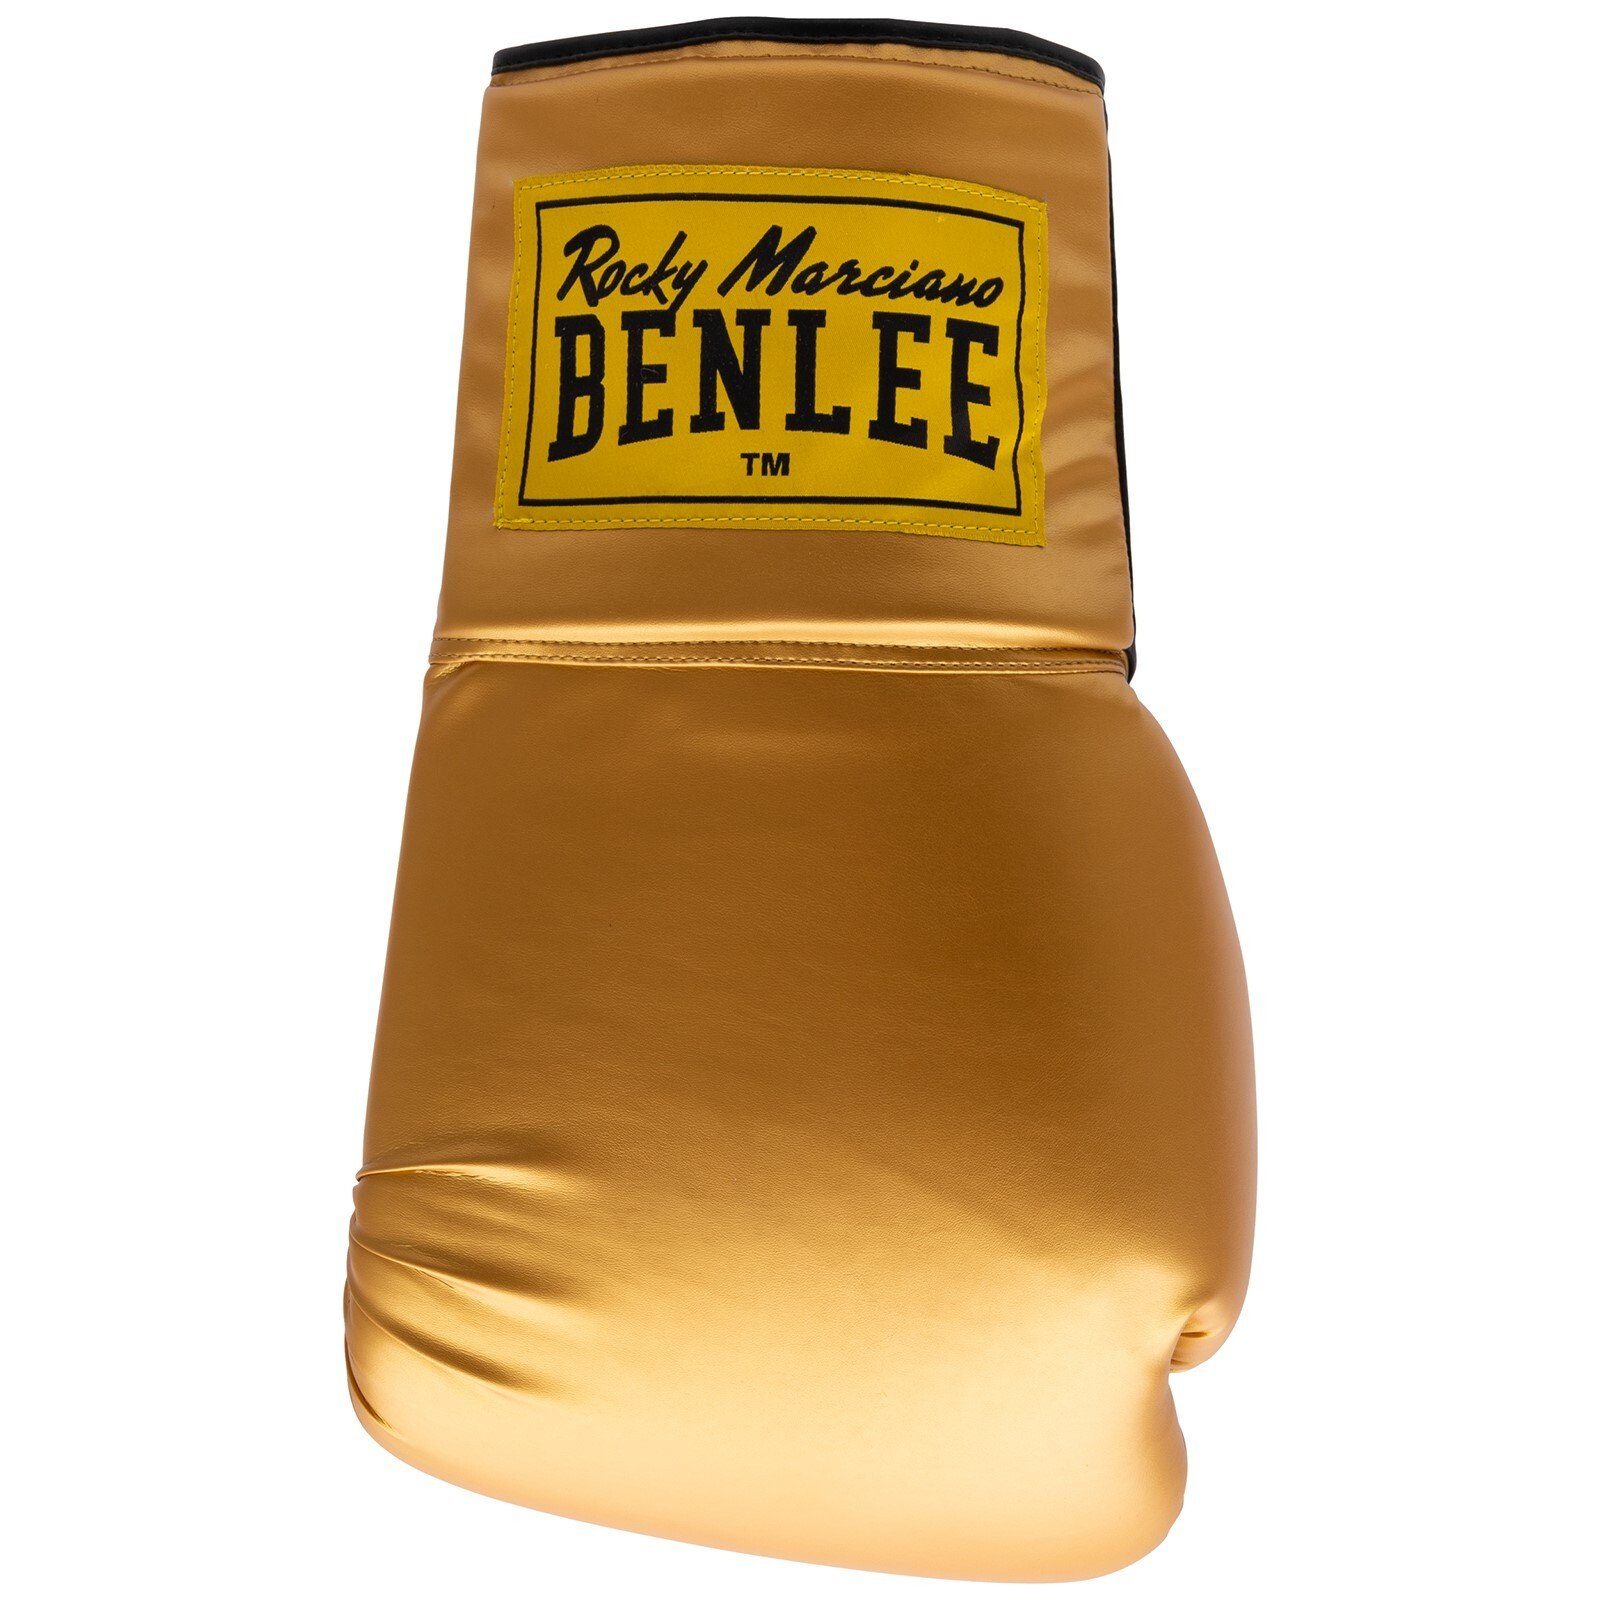 Benlee Rocky Marciano Boxhandschuhe GIANT BENLEE Gold